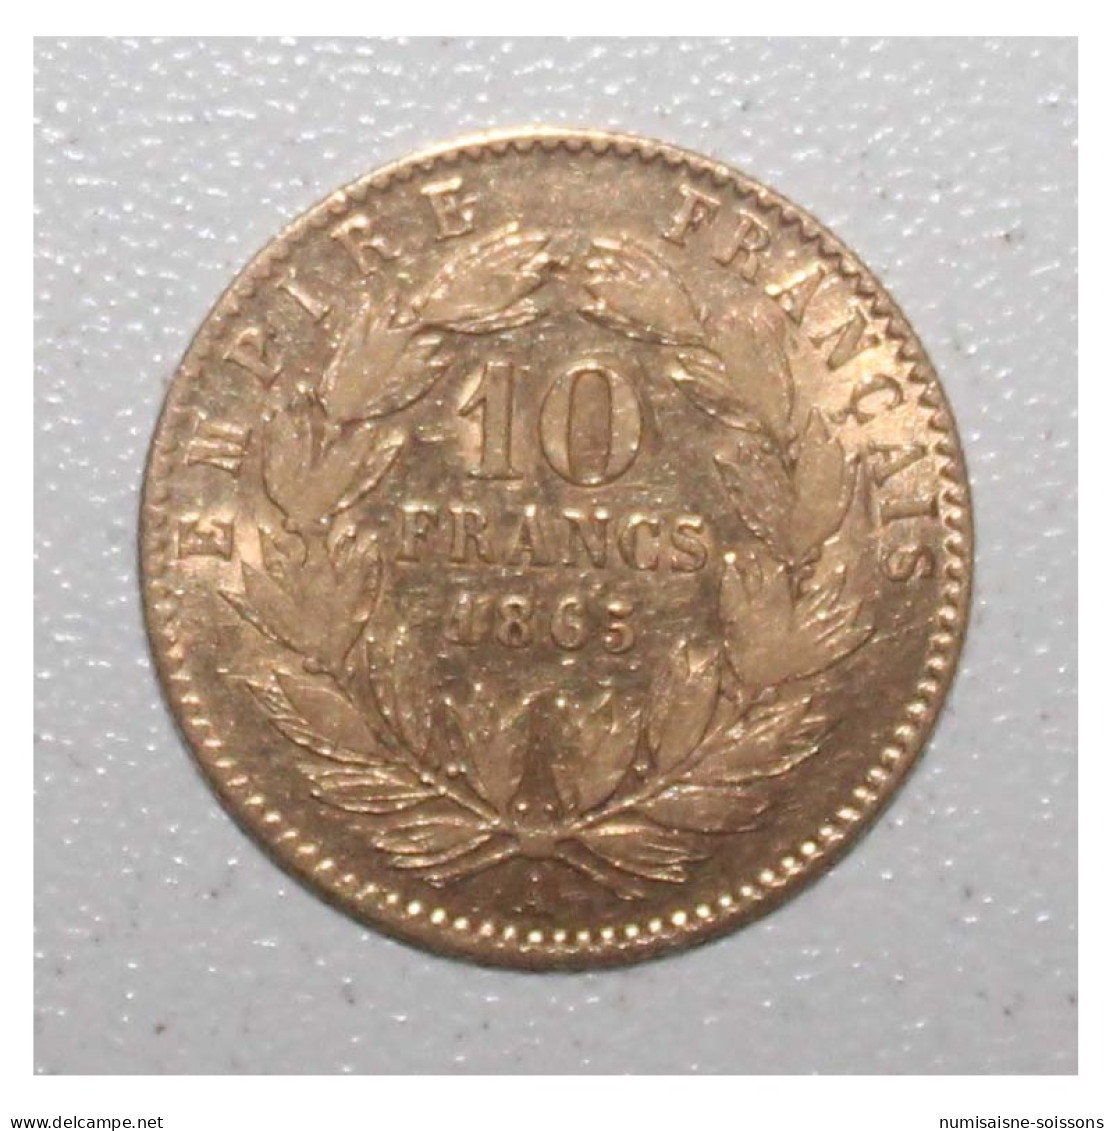 GADOURY 1015 - 10 FRANCS 1866 A - Paris - OR - TYPE NAPOLÉON III - KM 800 - TTB - 10 Francs (gold)